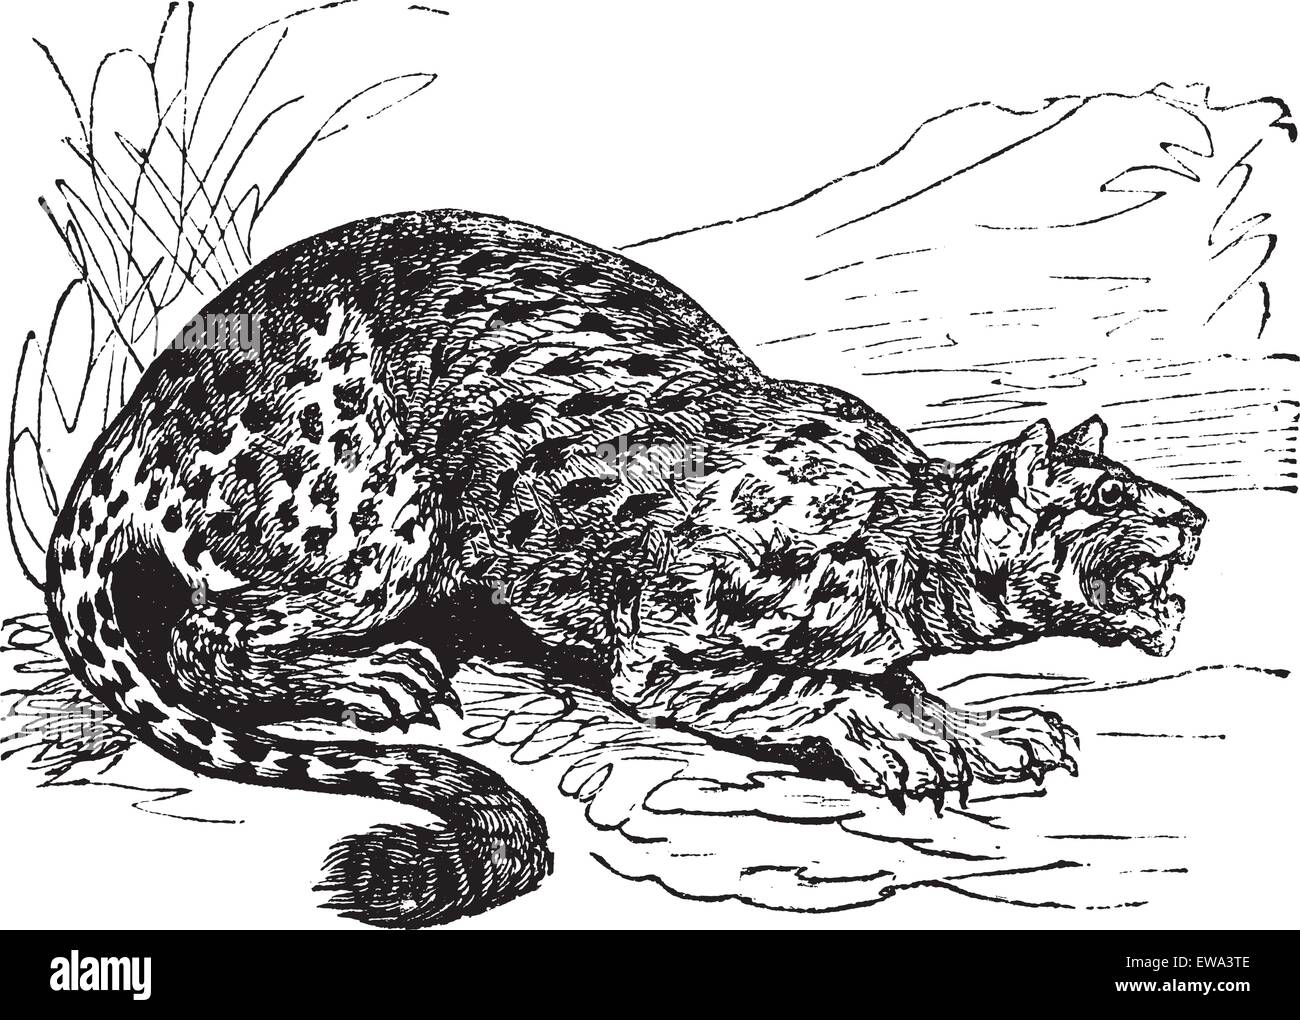 Tigerkatze oder Little Spotted Cat oder Tigrillo oder Cunaguaro oder Tigerkatze pardalis Tigrinus, graviert Vintage Illustration. Trousset Enzyklopädie (1886-1891). Stock Vektor